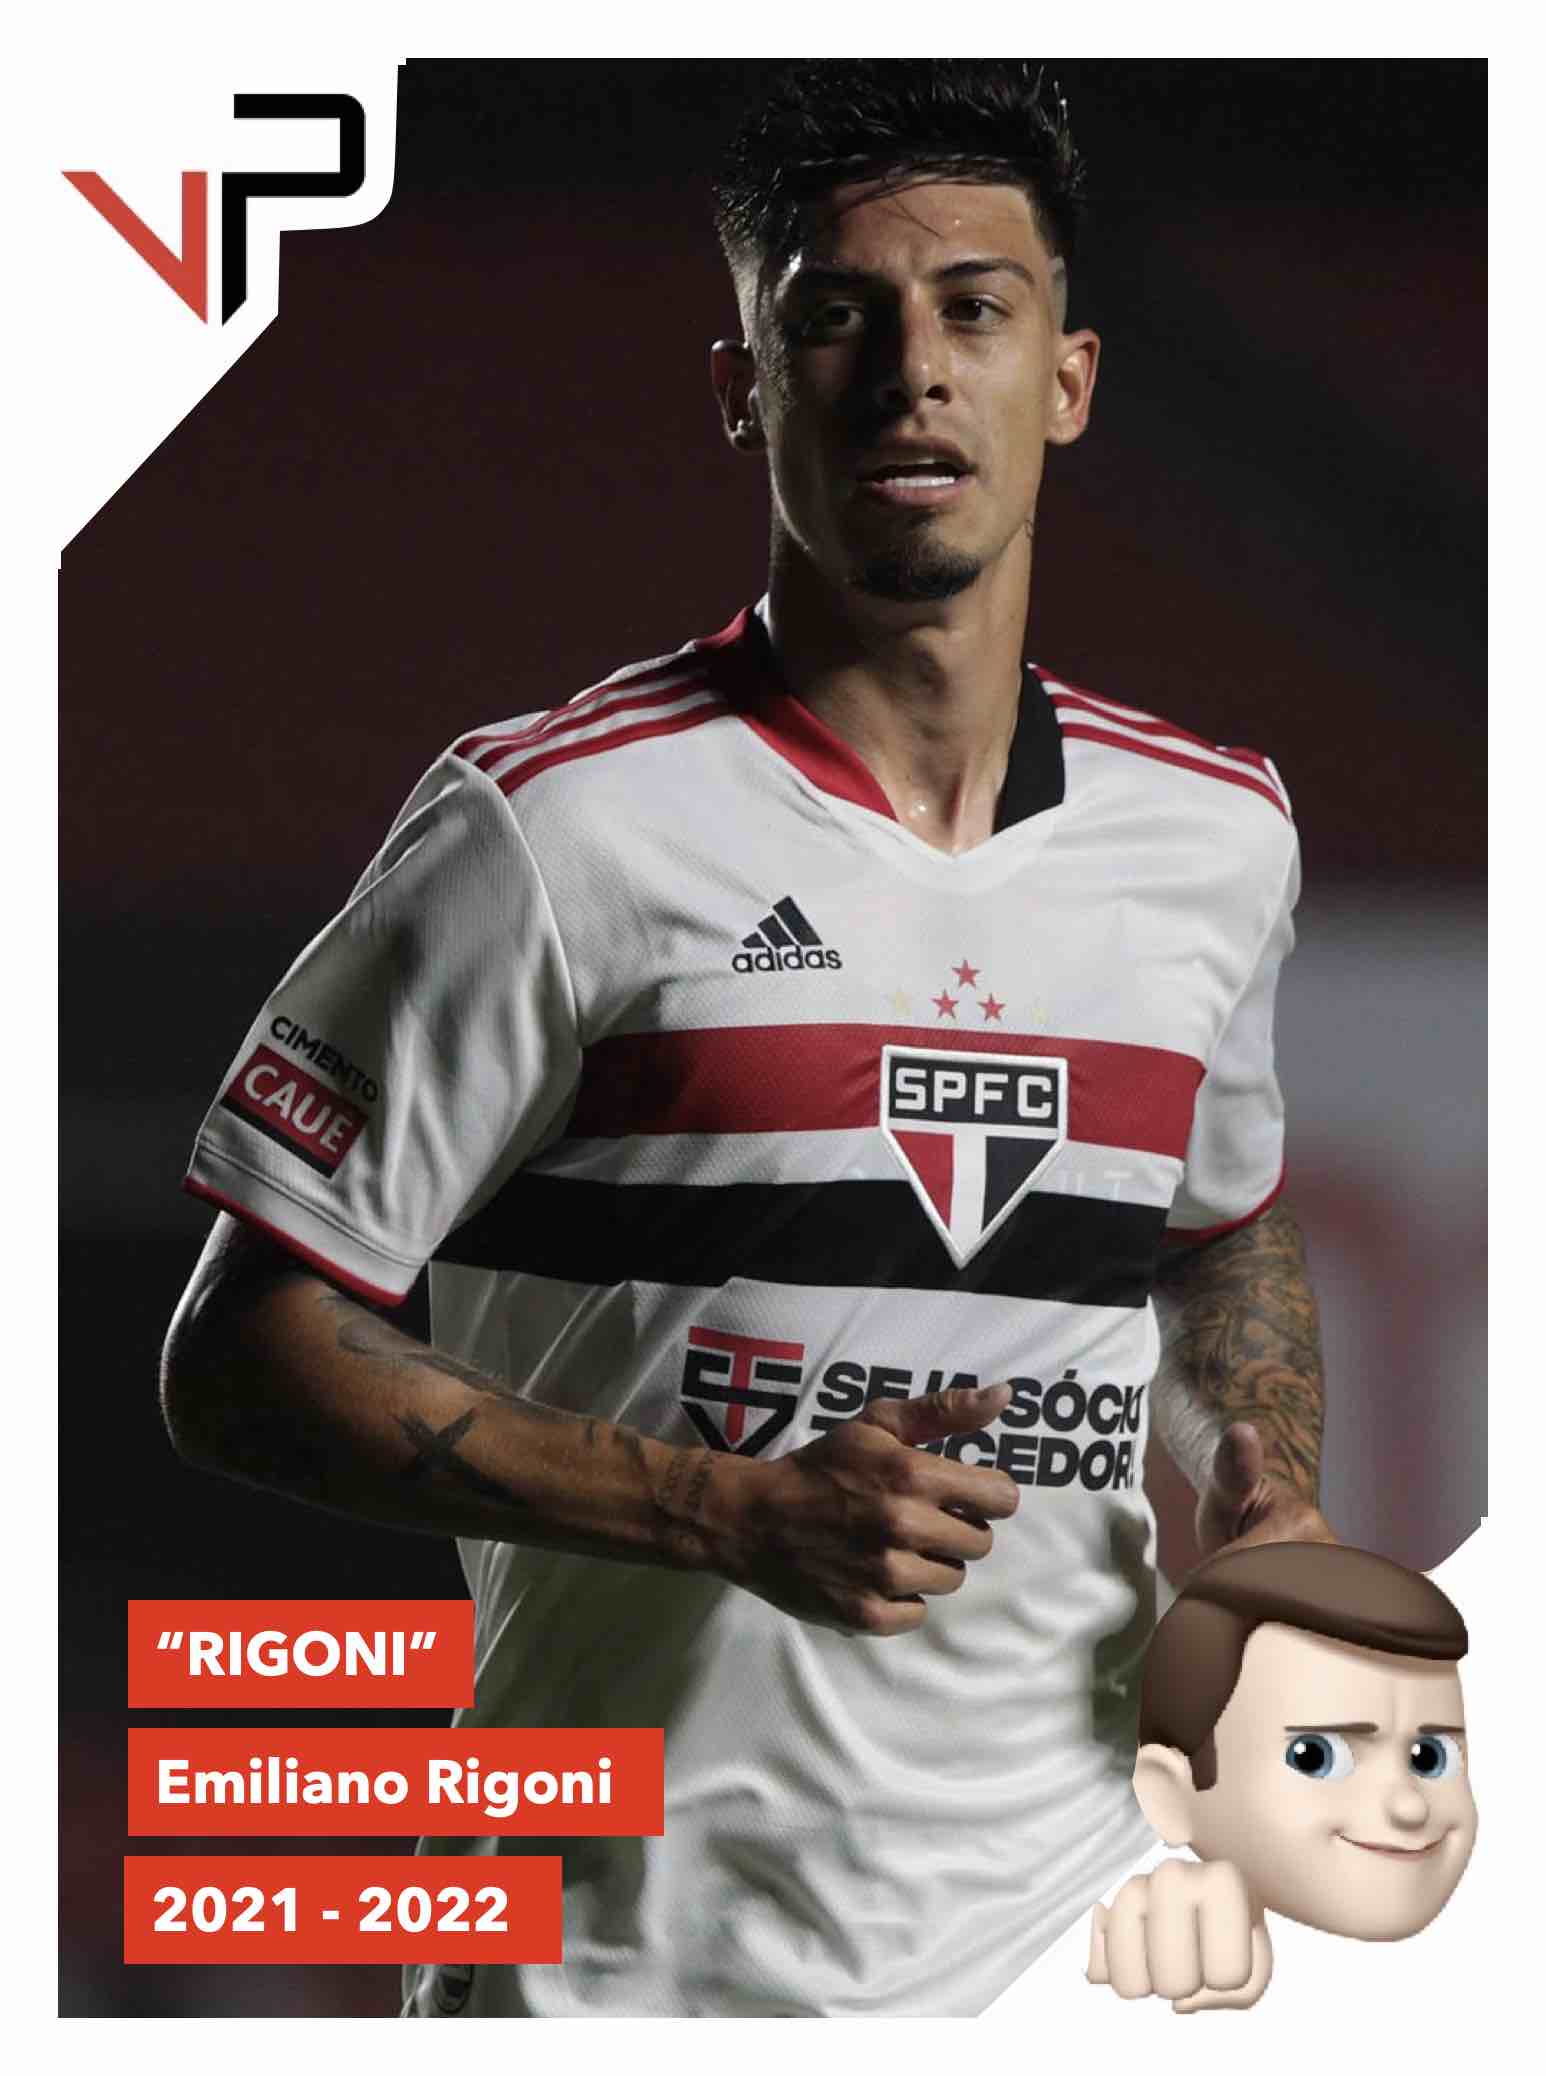 Gerson explica escolha de camisa 20 do Flamengo: 'Homenagem a Vini Jr.', Flamengo